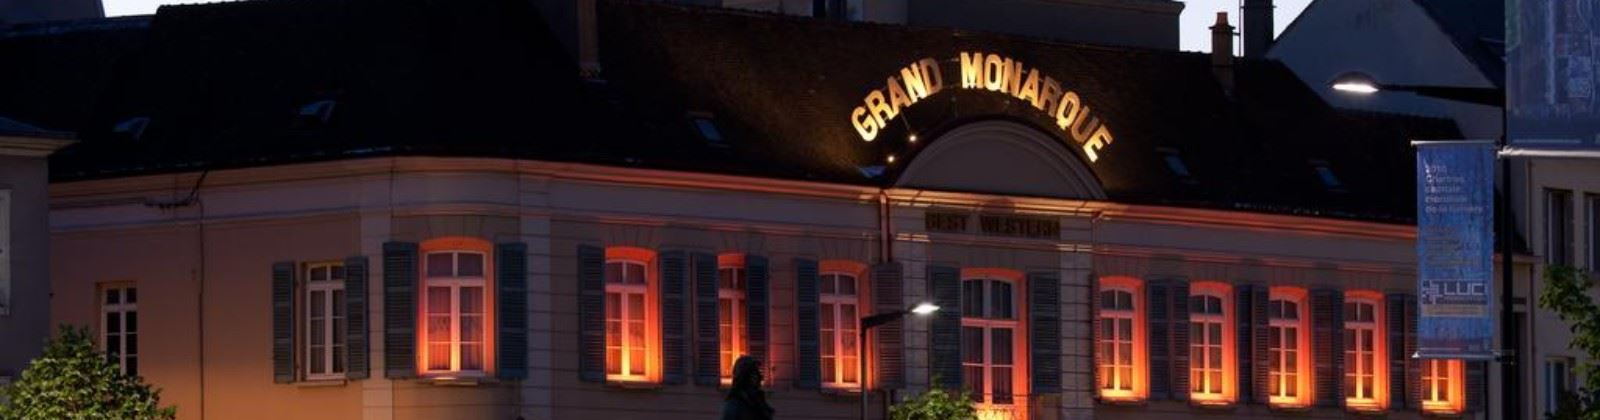 OLEVENE image - le-grand-monarque-olevene-hotel-restaurant-convention-reunion-